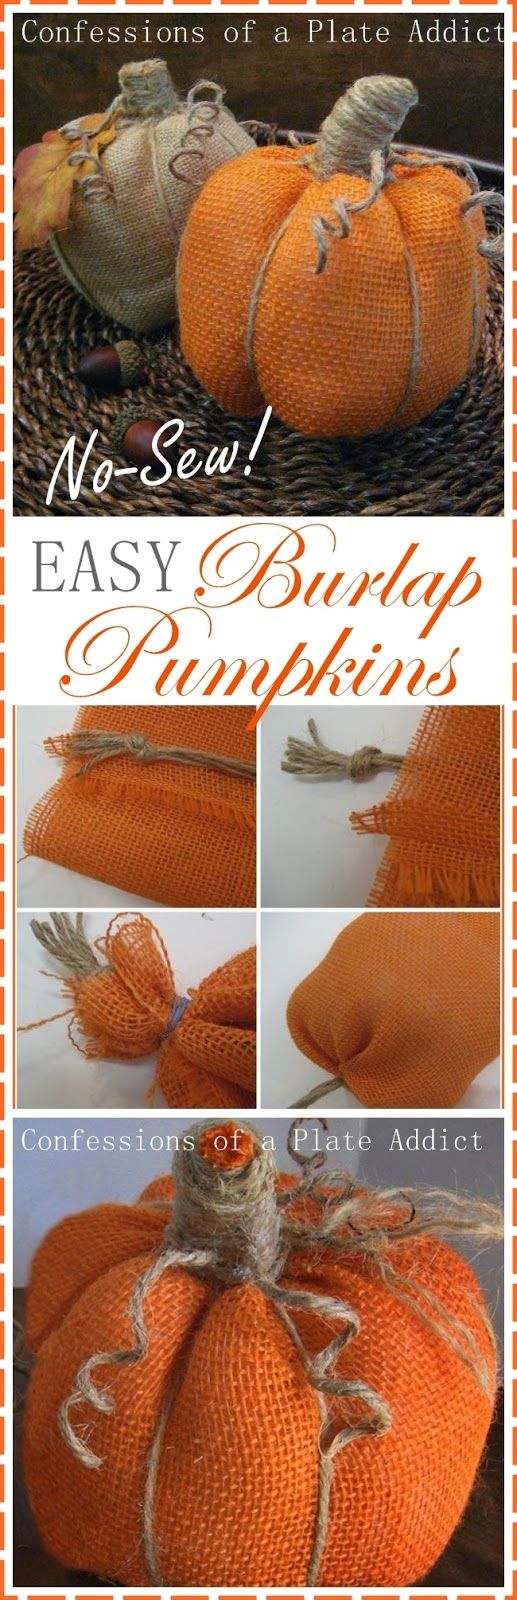 Burlap Pumpkins are Cute as Can Be